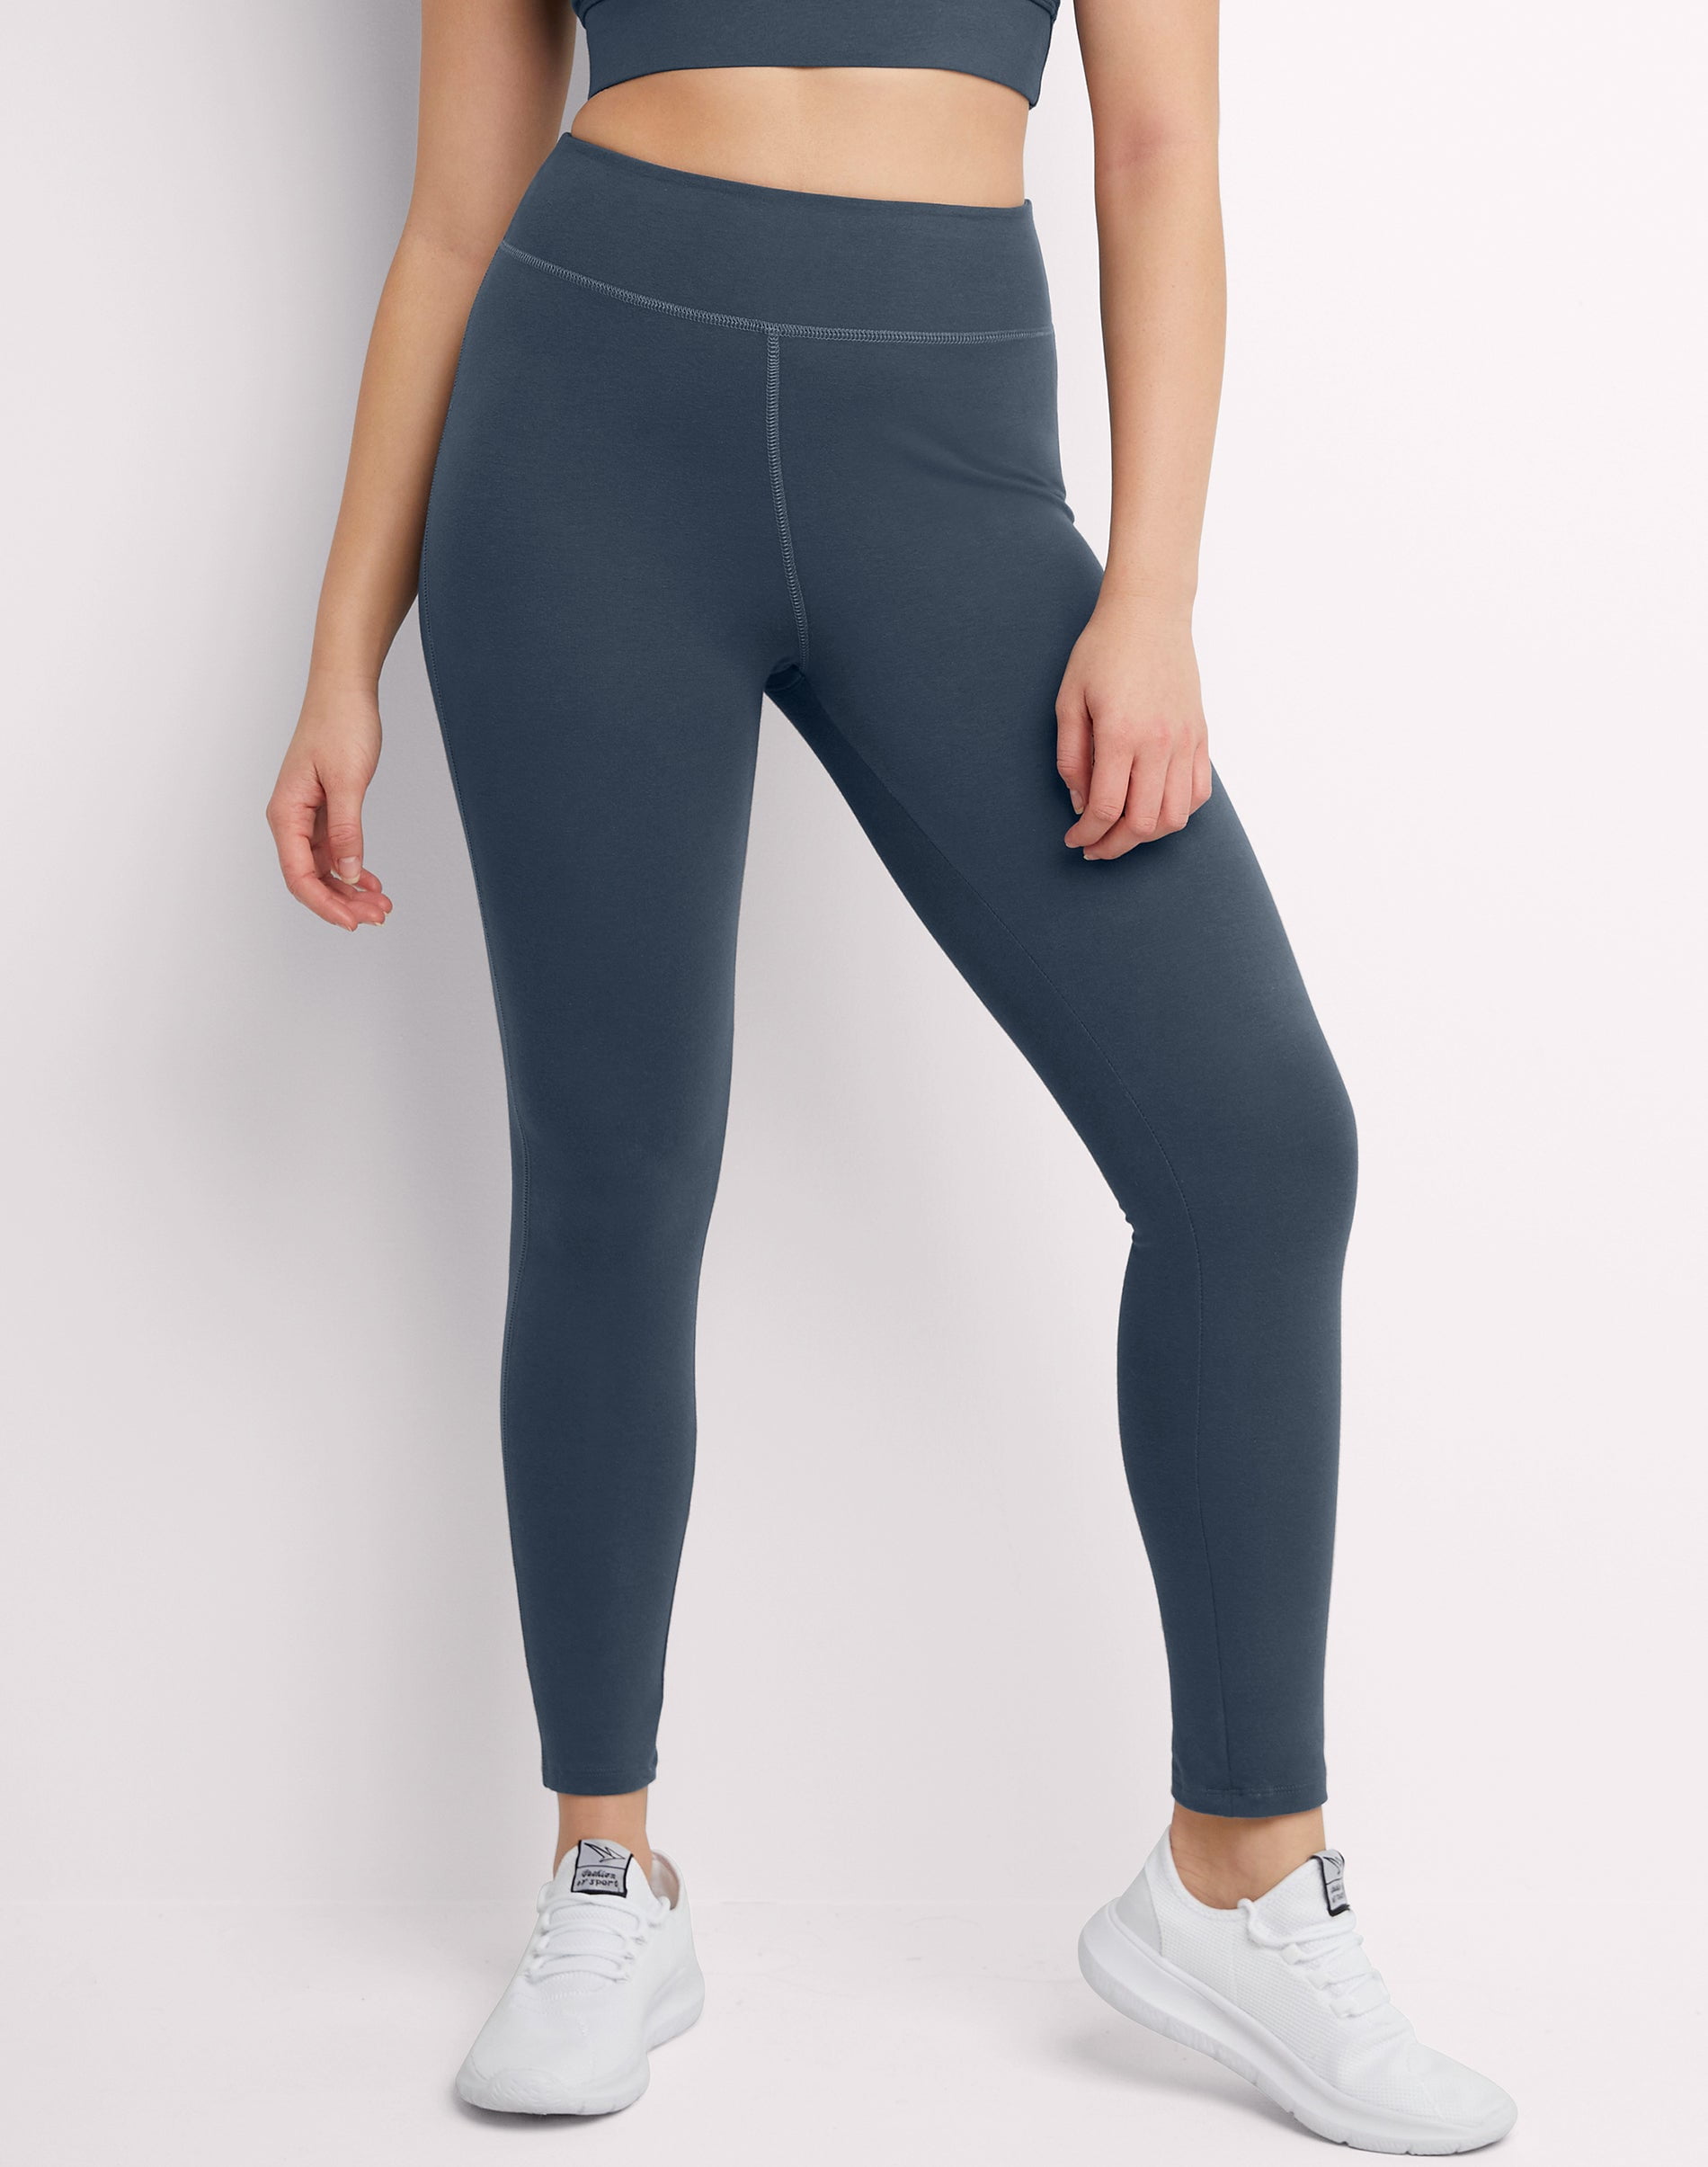 NWT $78 WomenX By Gottex Leggings Active Yoga Back Mesh Leggings Gray  Heather L